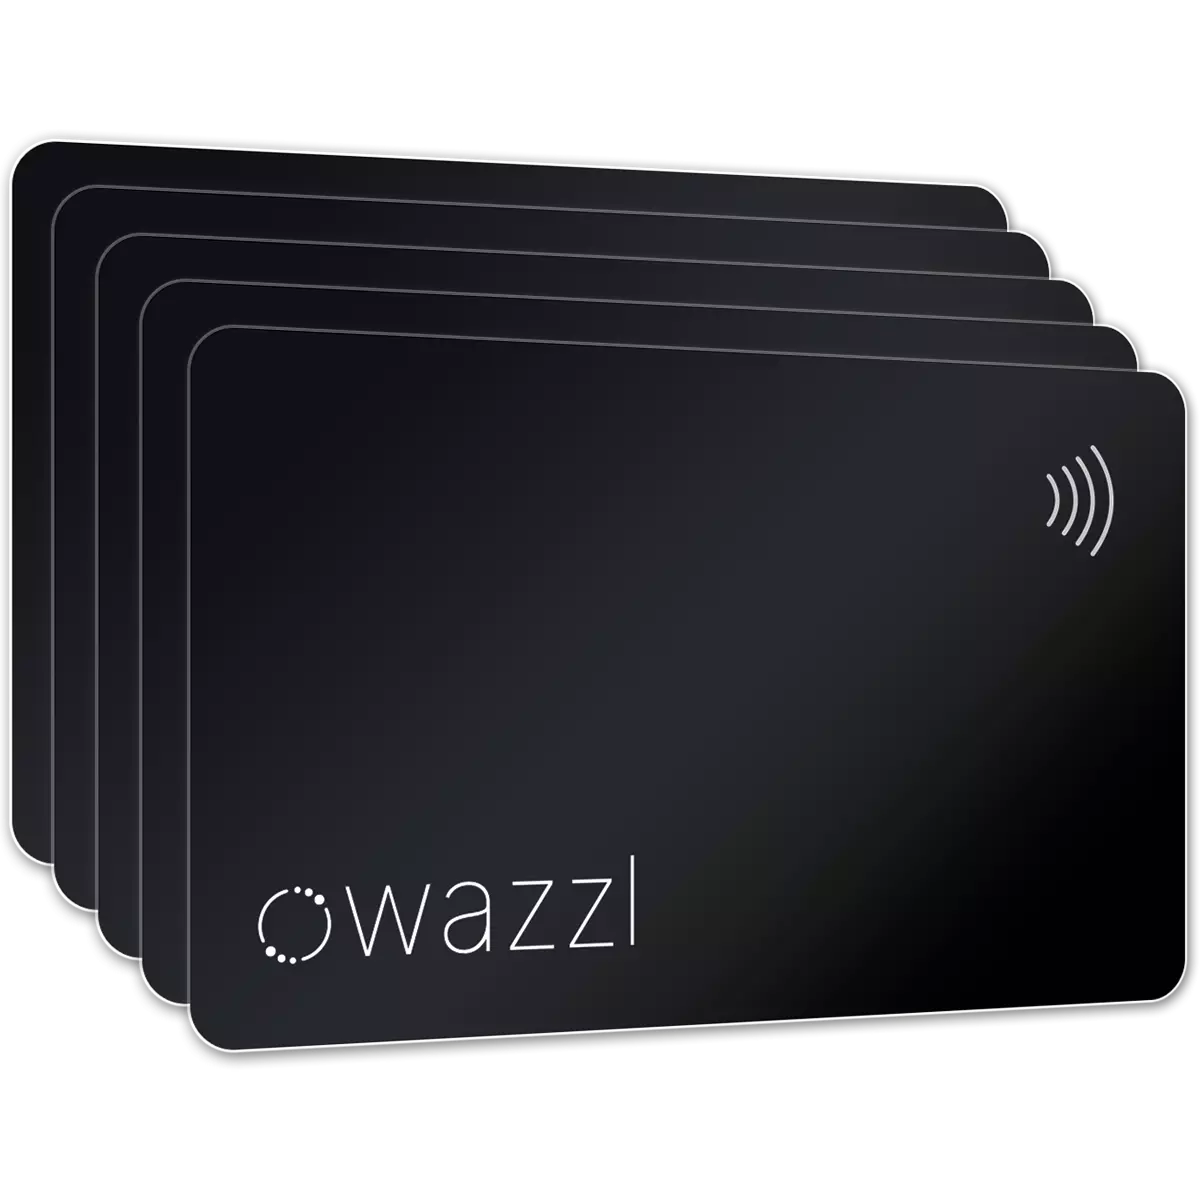 Smartcard 5 bundle - Digital business card